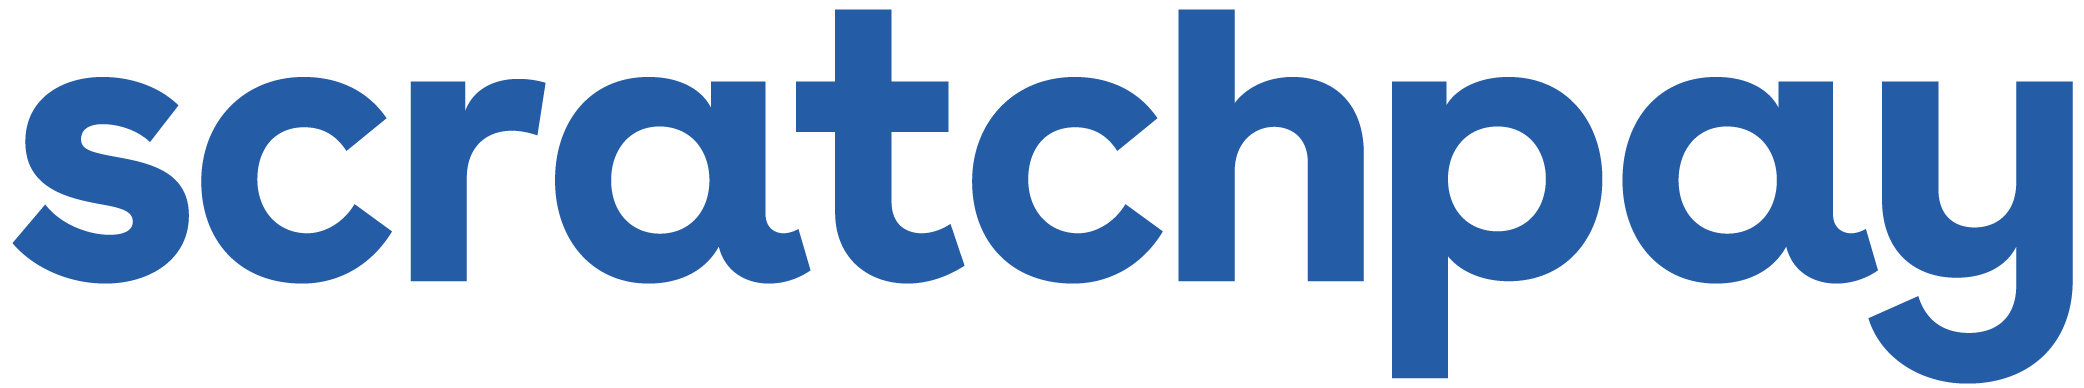 Scratchpay_Logo_Wordmark_Small_Blue